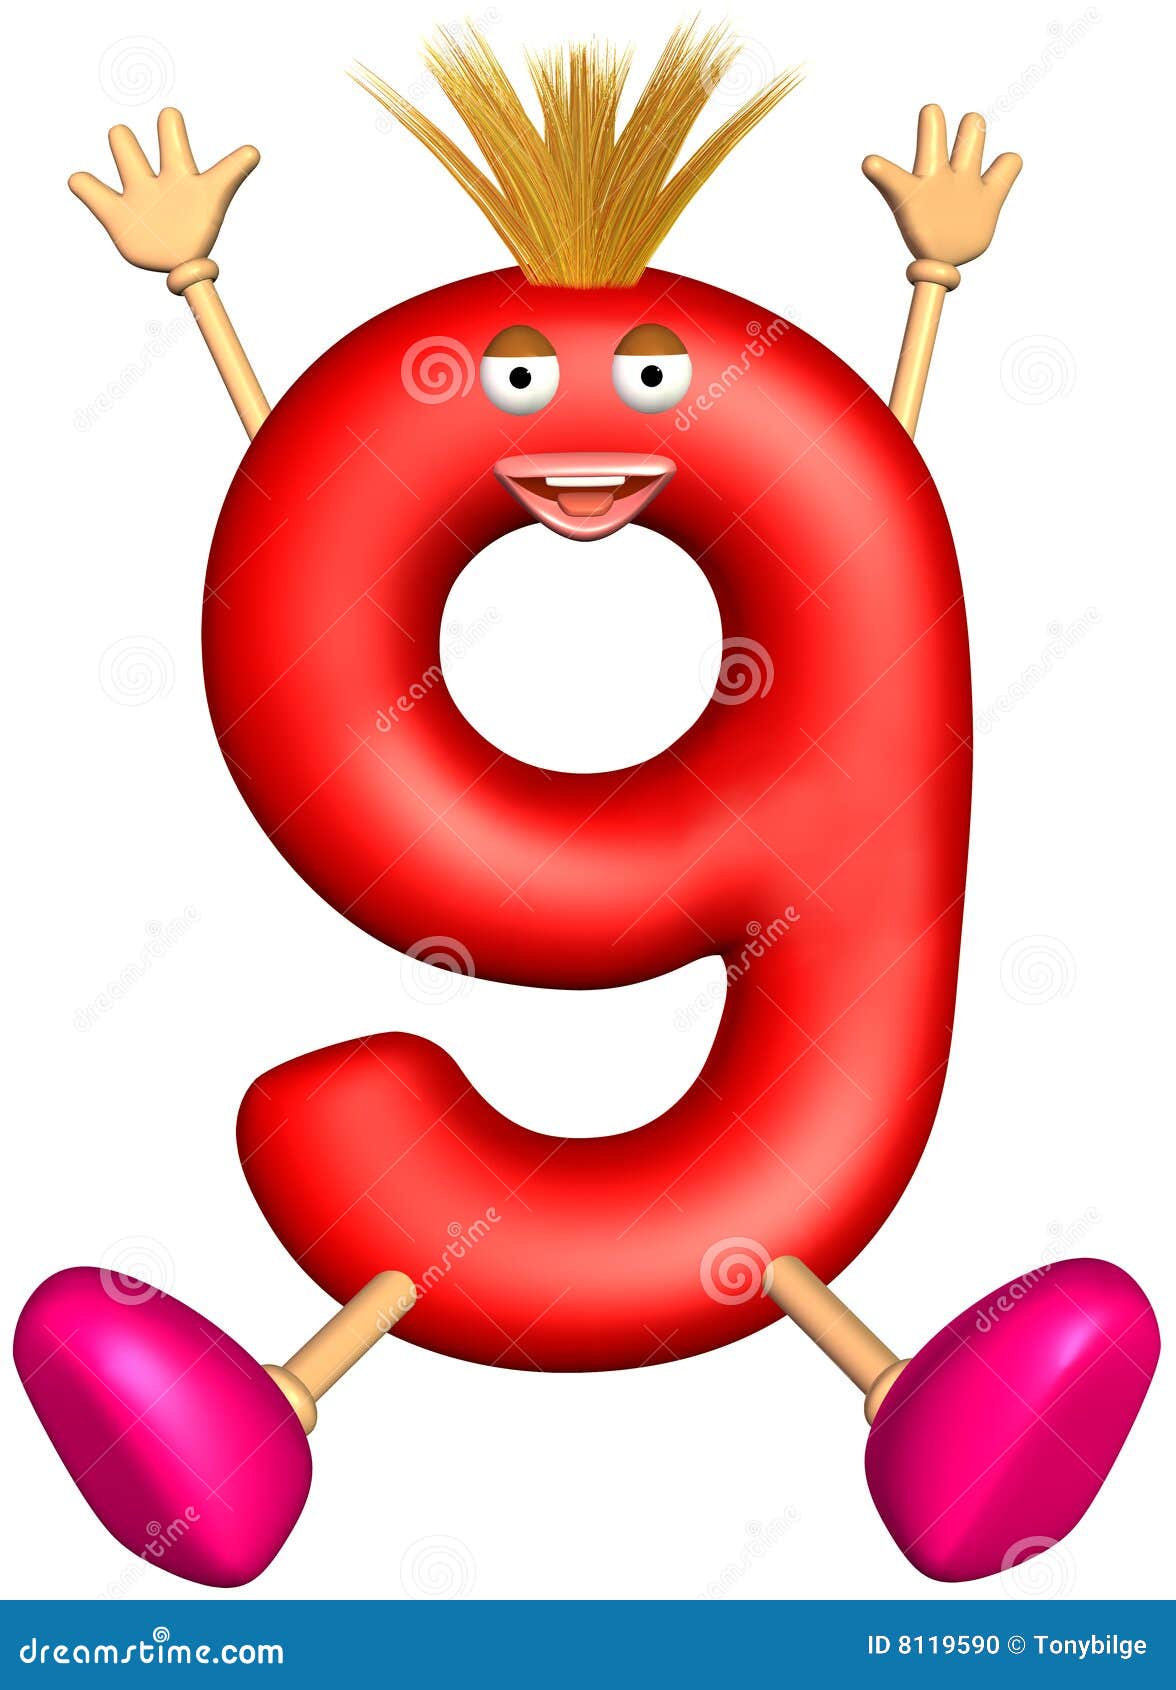 digit character of nine